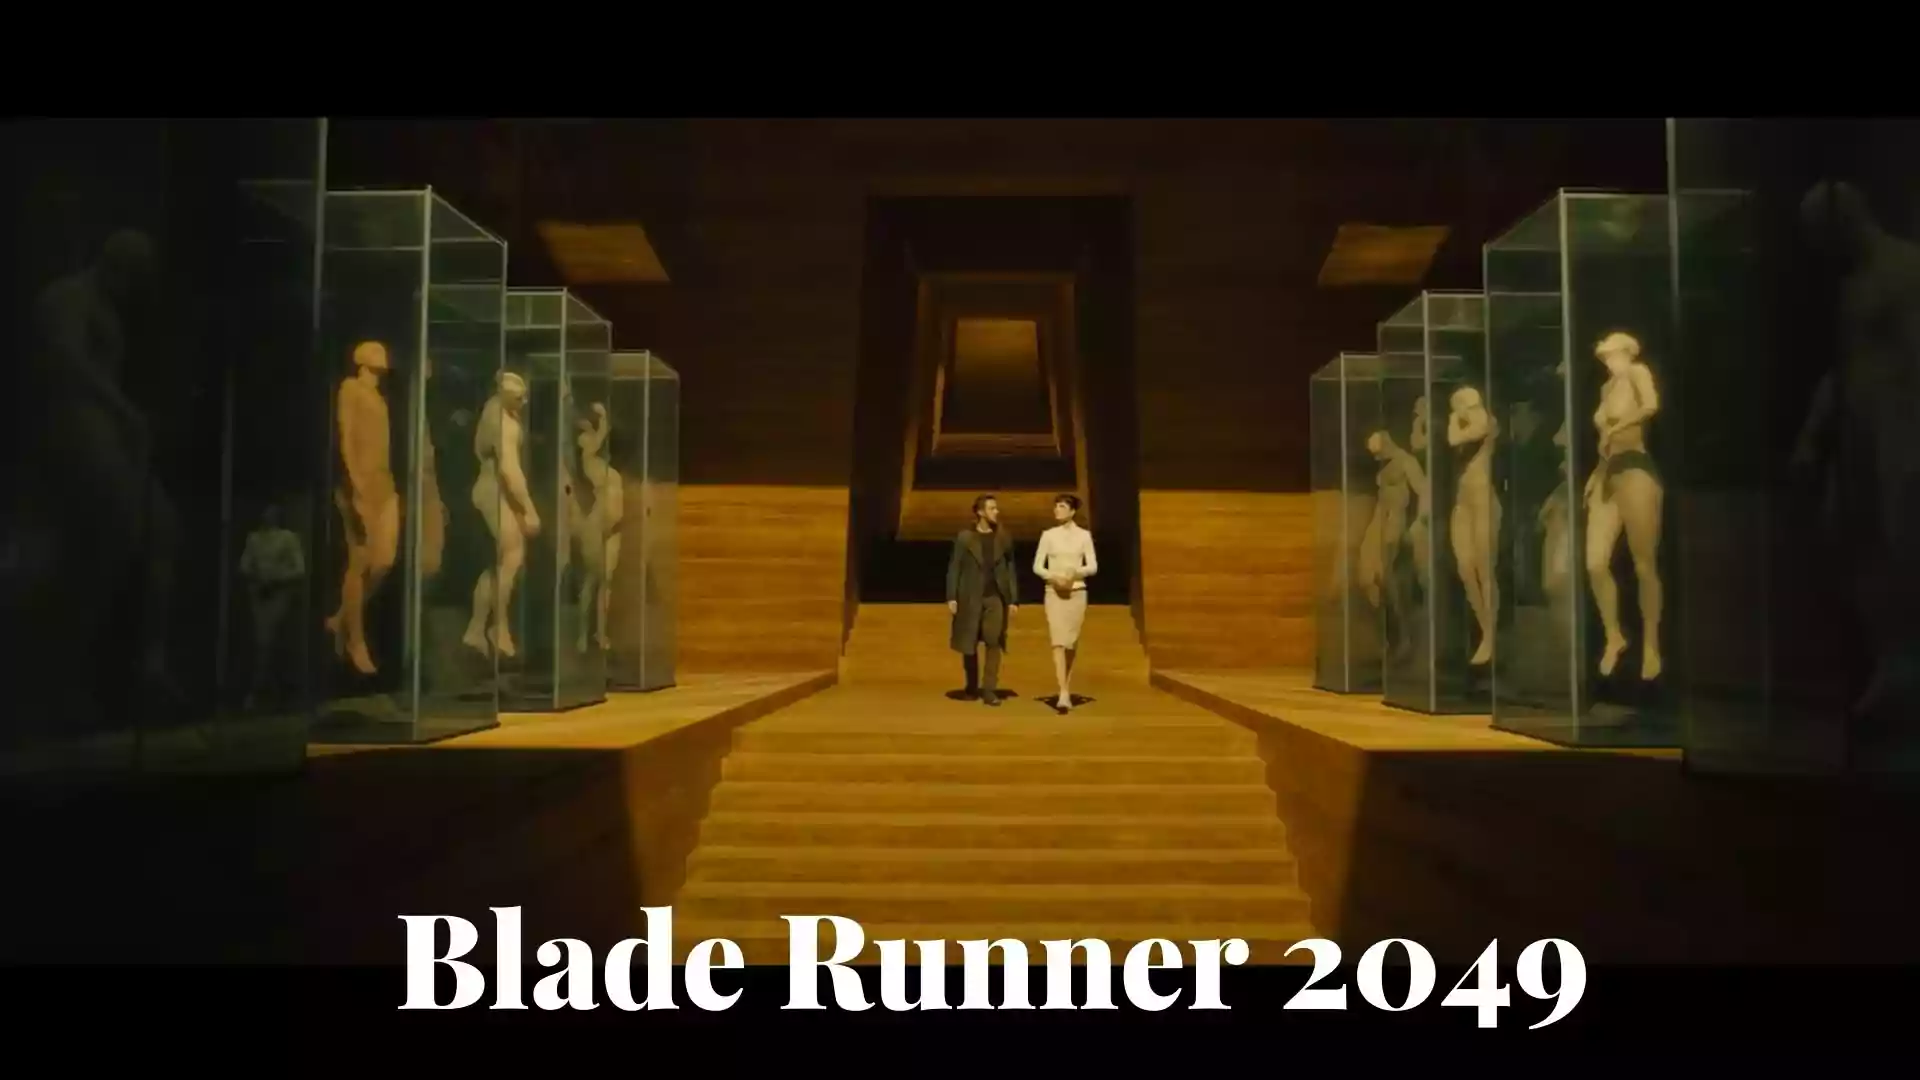 Blade Runner 2049 Wallpaper and Image